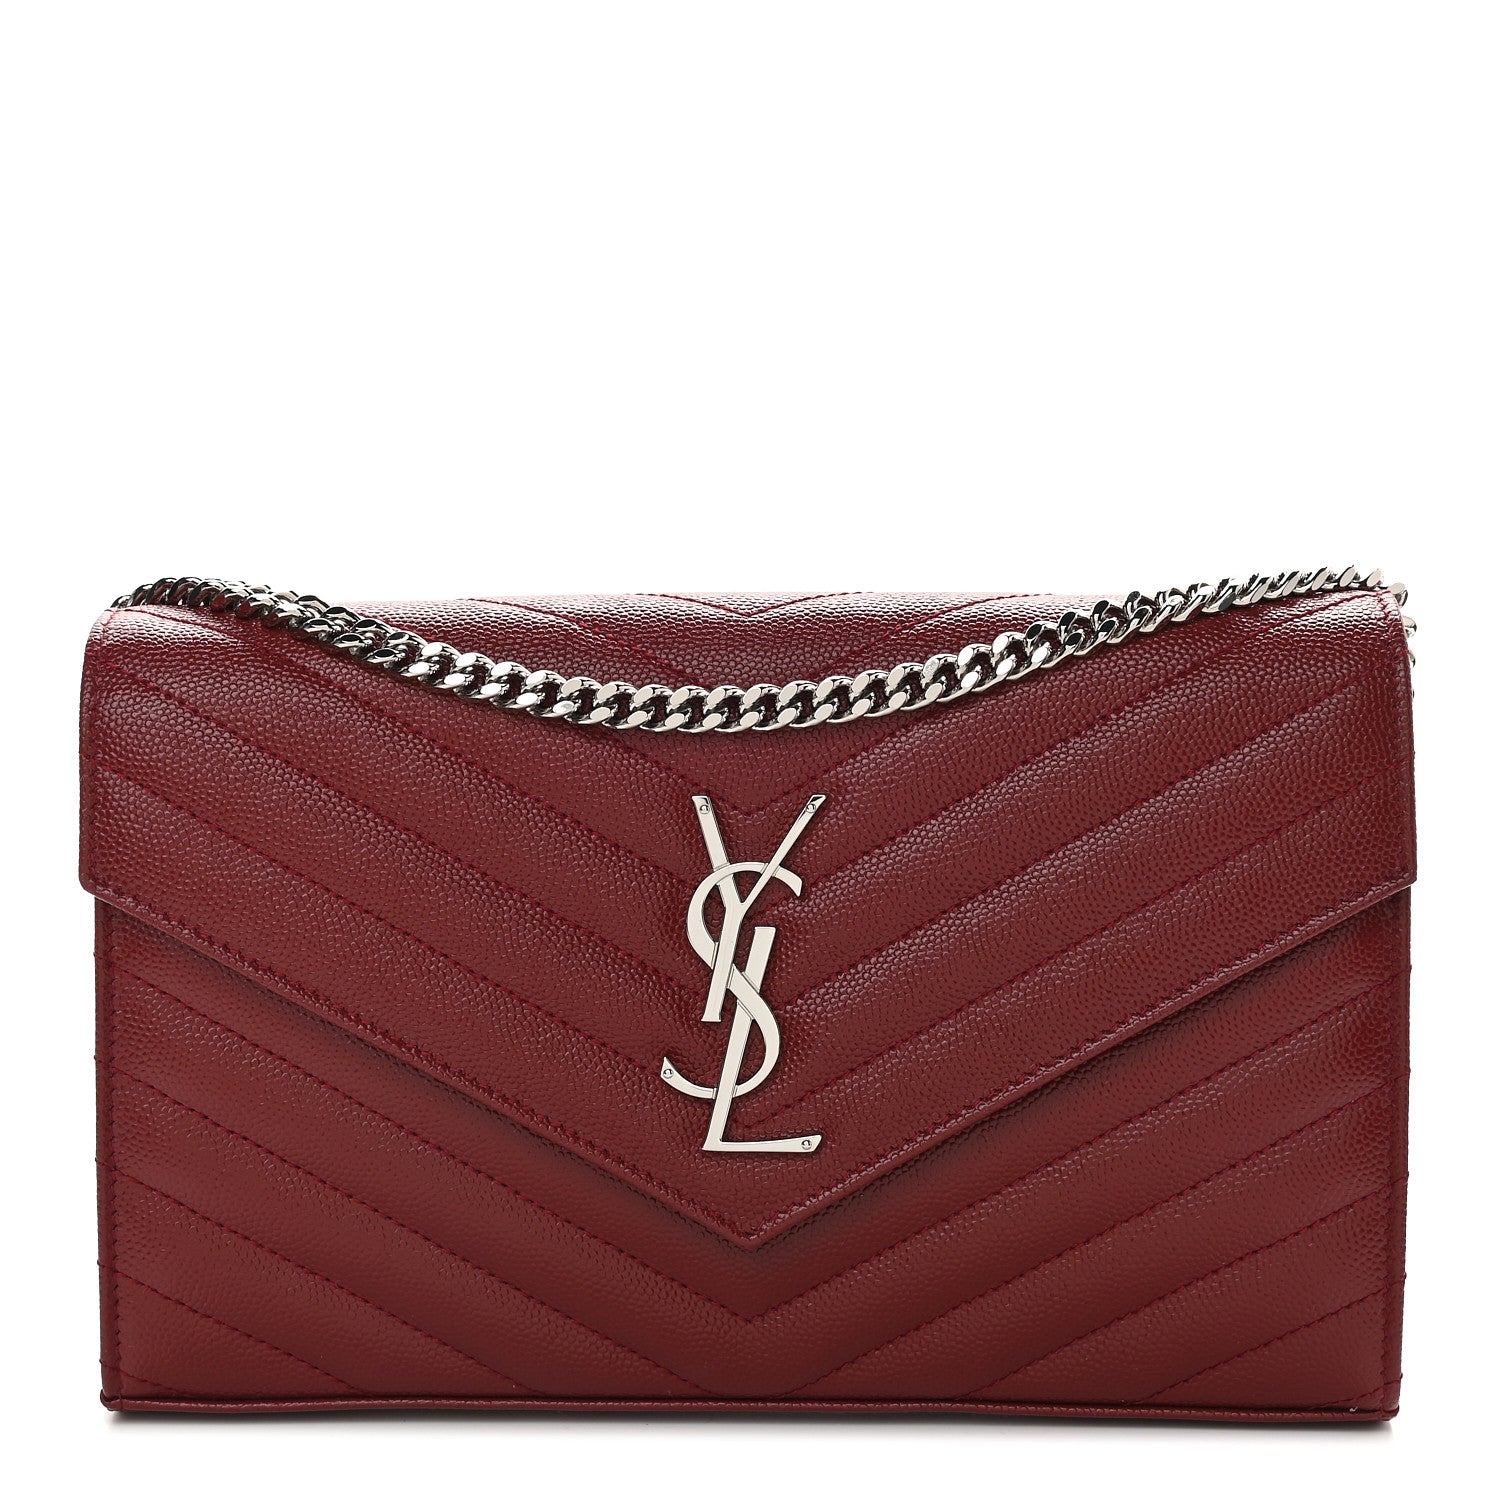 Saint Laurent Monogram Chain Wallet Grain de Poudre Leather Red Bag 377828 at_Queen_Bee_of_Beverly_Hills